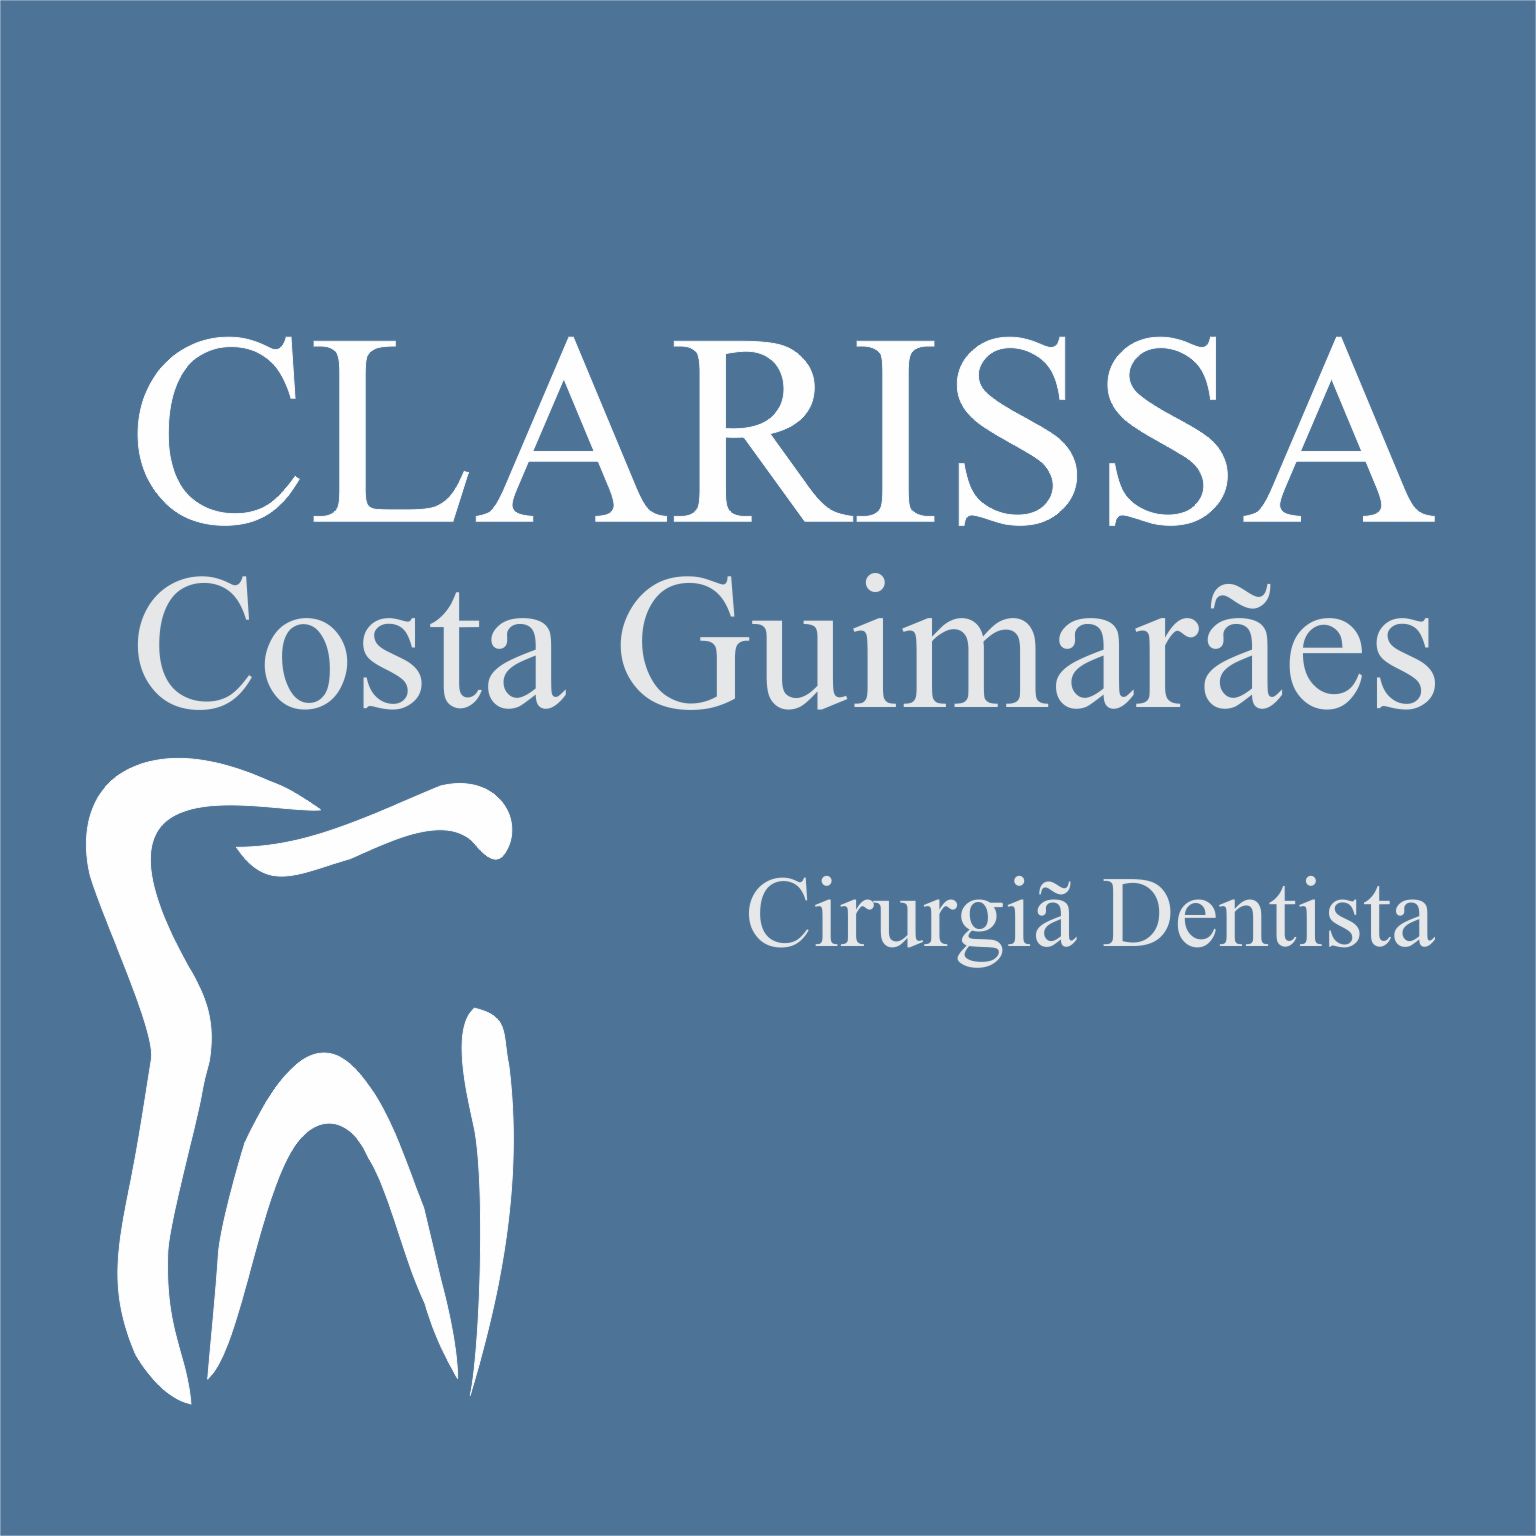 Clarissa Costa Guimarães